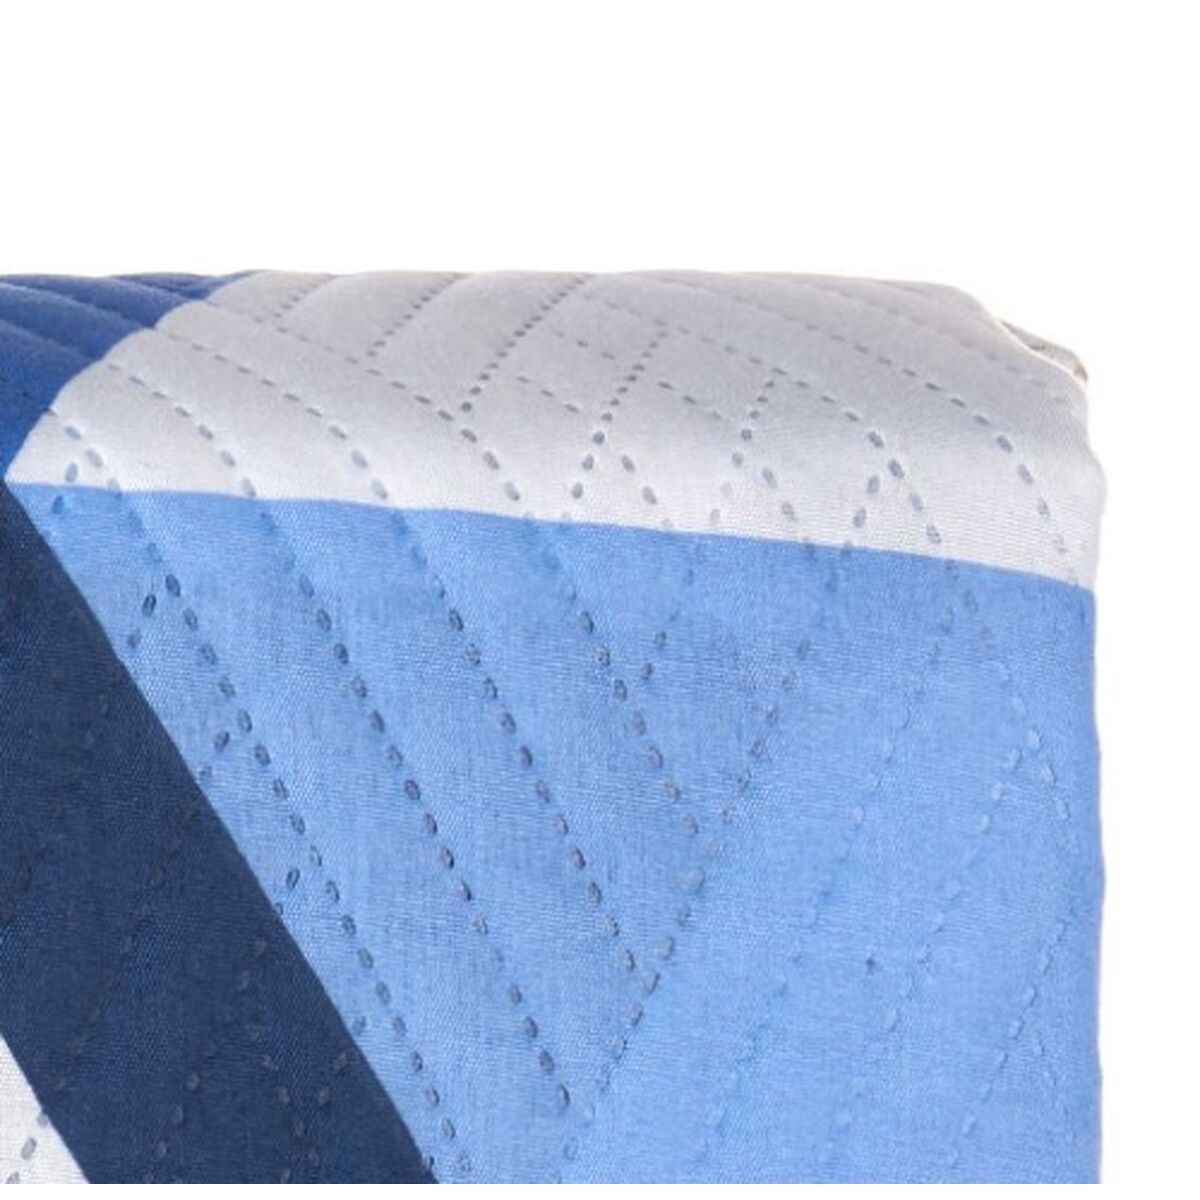 Reversible Bedspread 180 x 260 cm Blue White (6 Units)